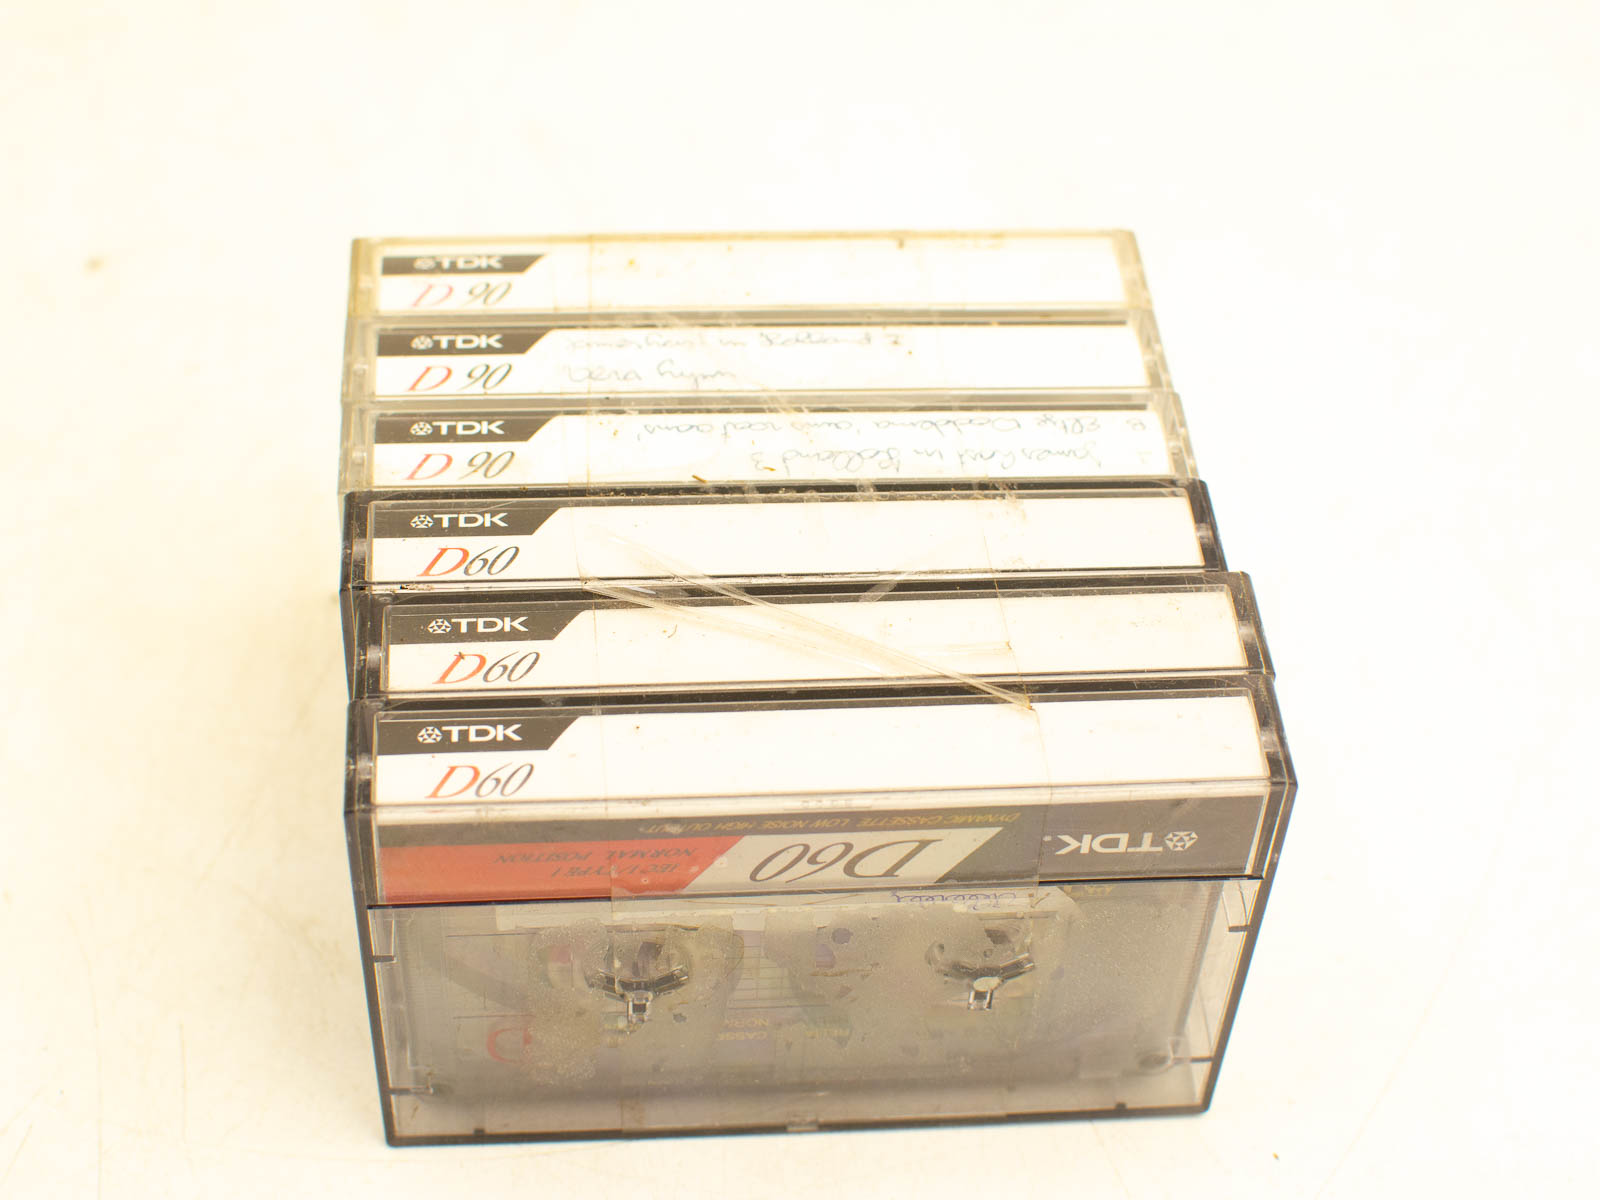 6 Tdk cassettebandjes 31271